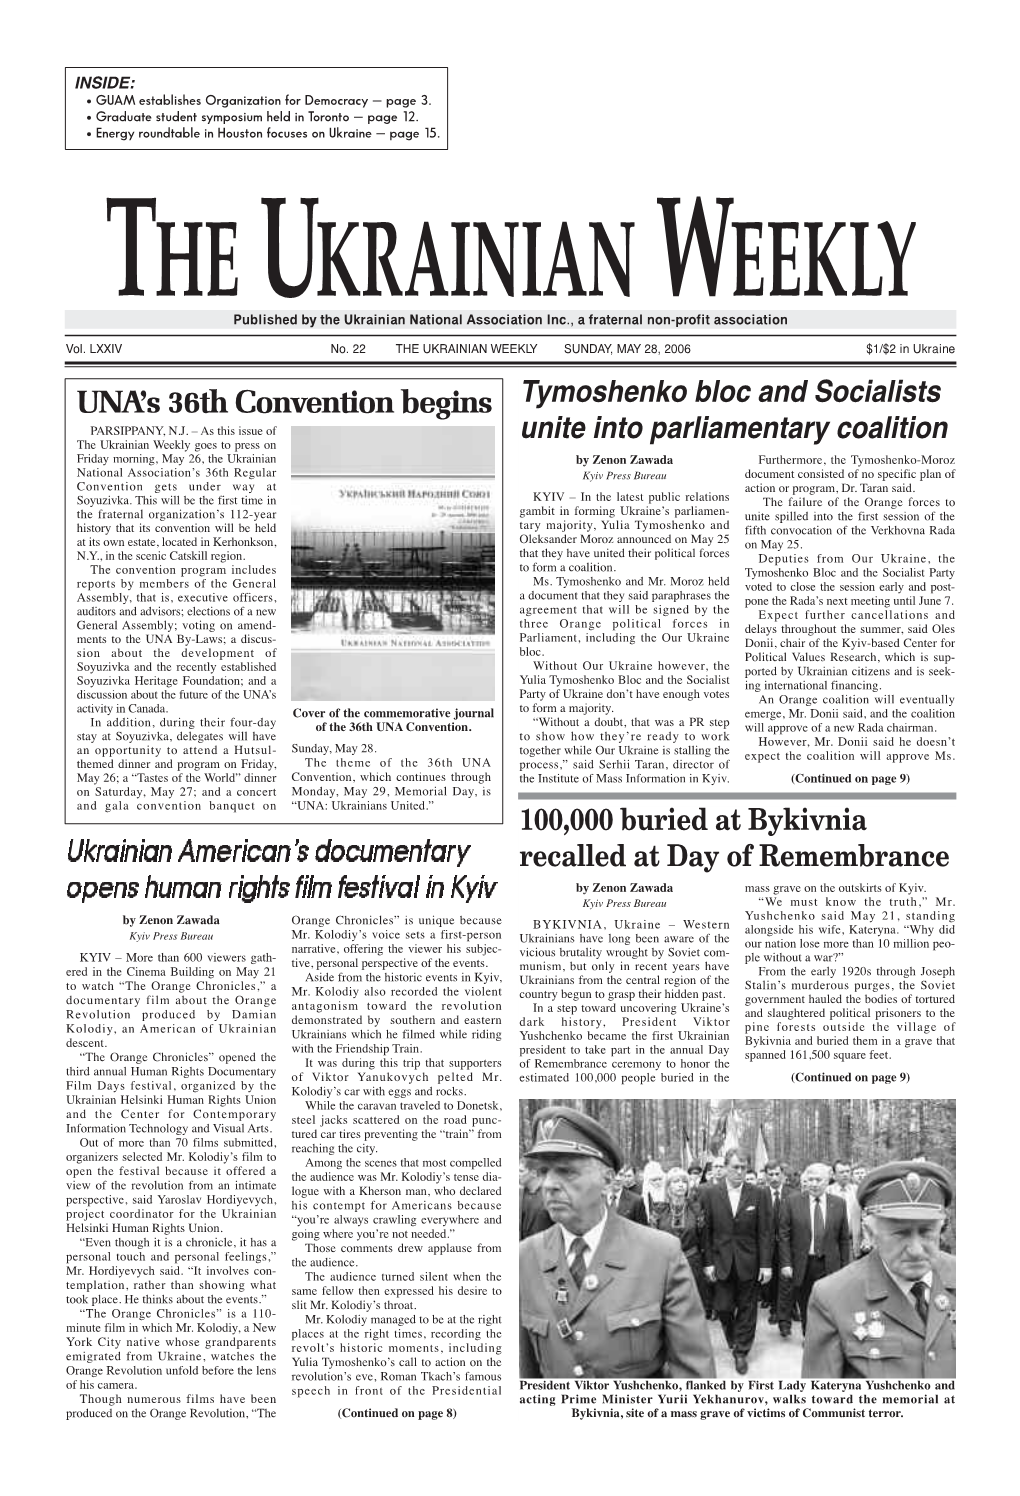 The Ukrainian Weekly 2006, No.22